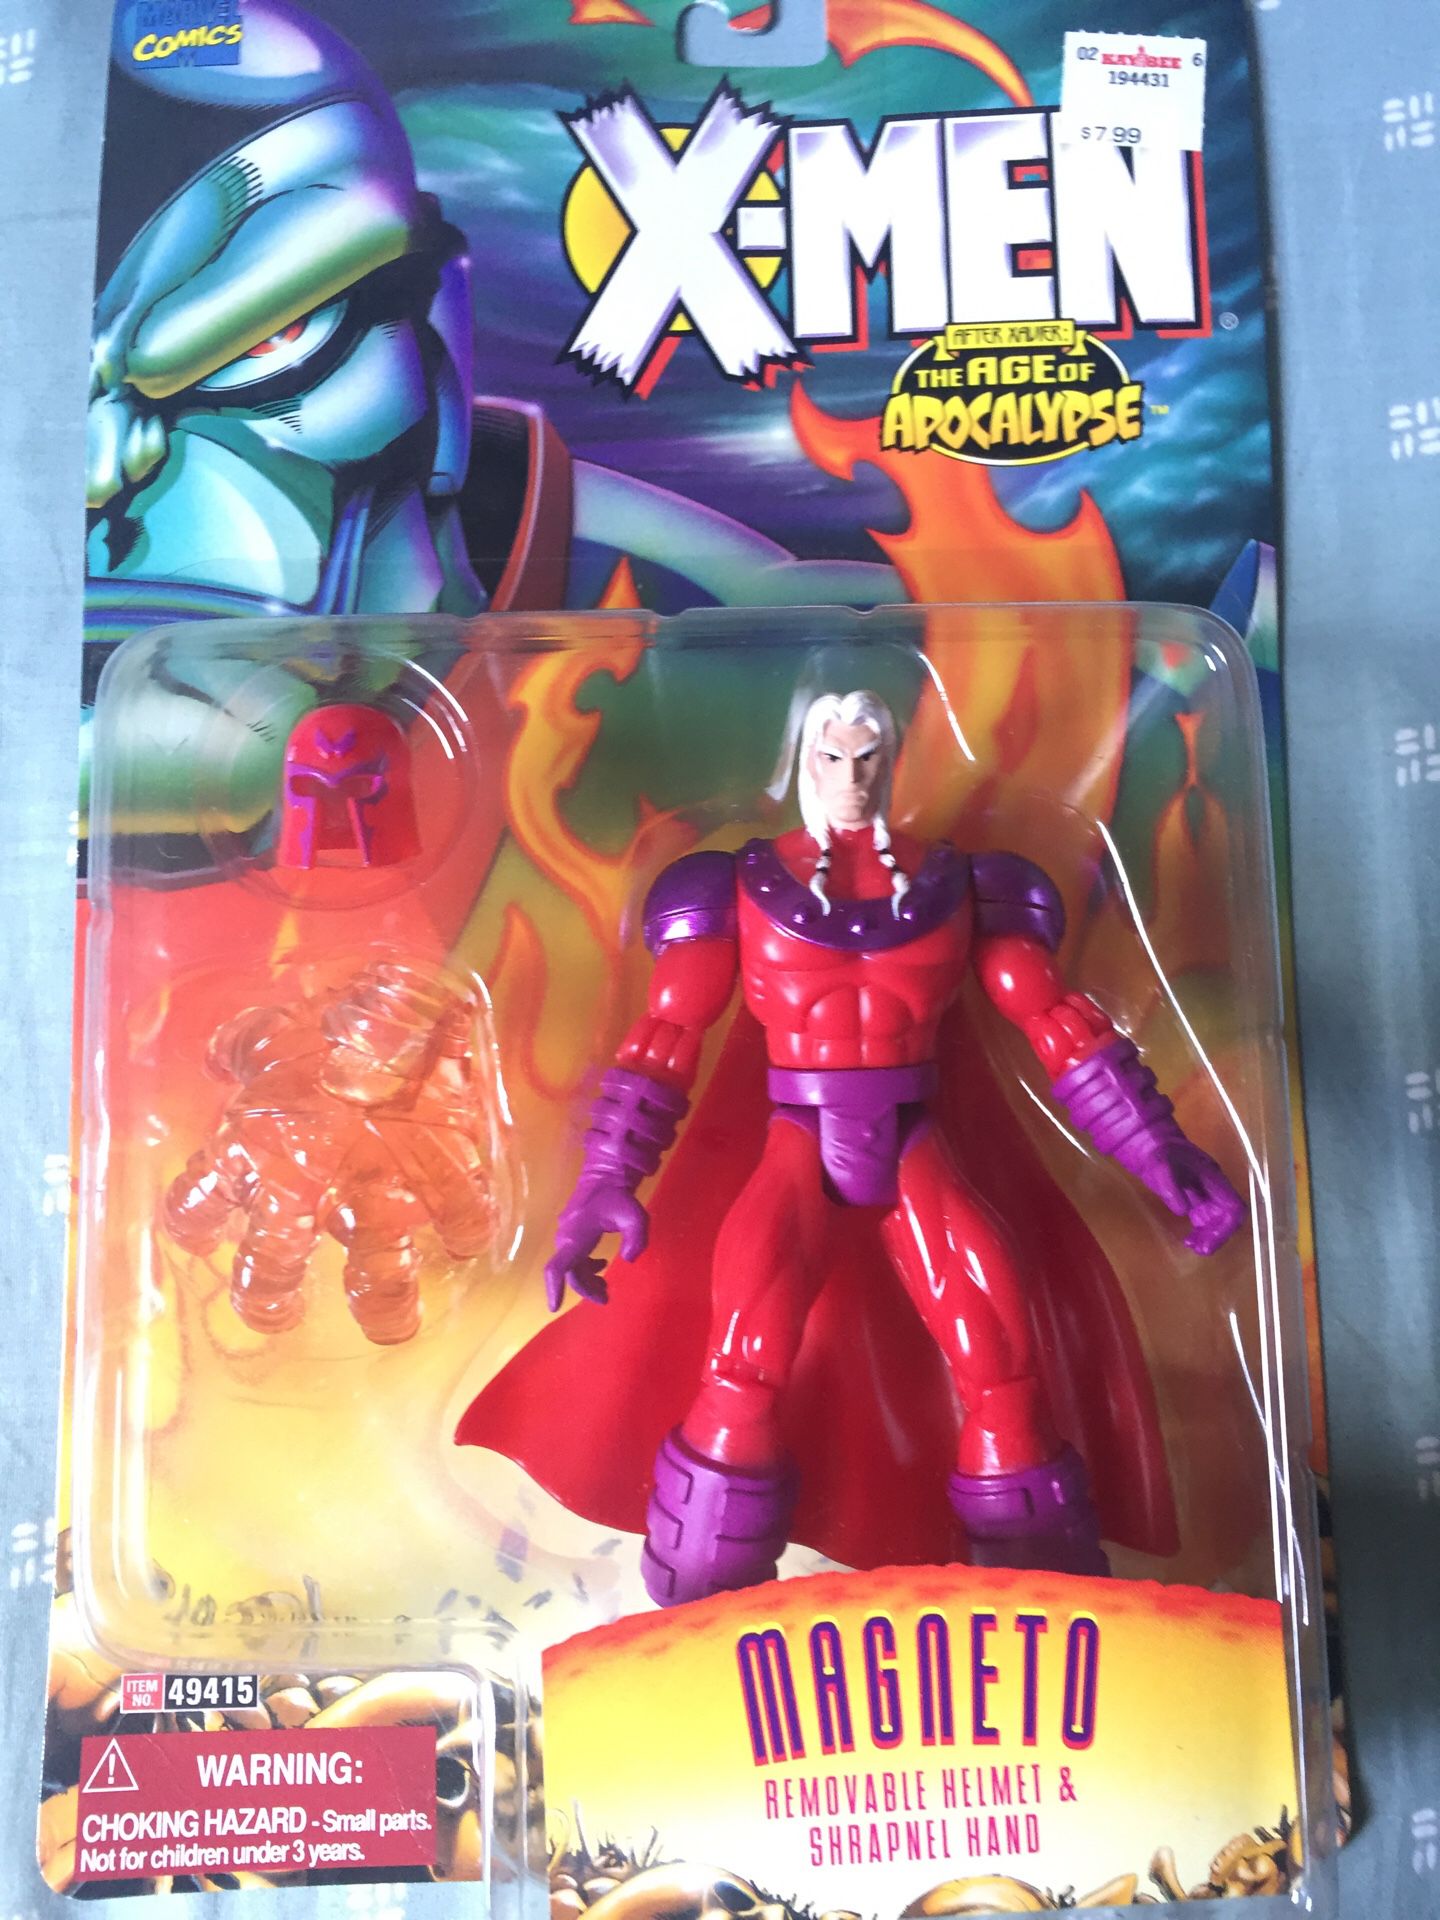 Magneto X-Men Age of Apocalypse action figure